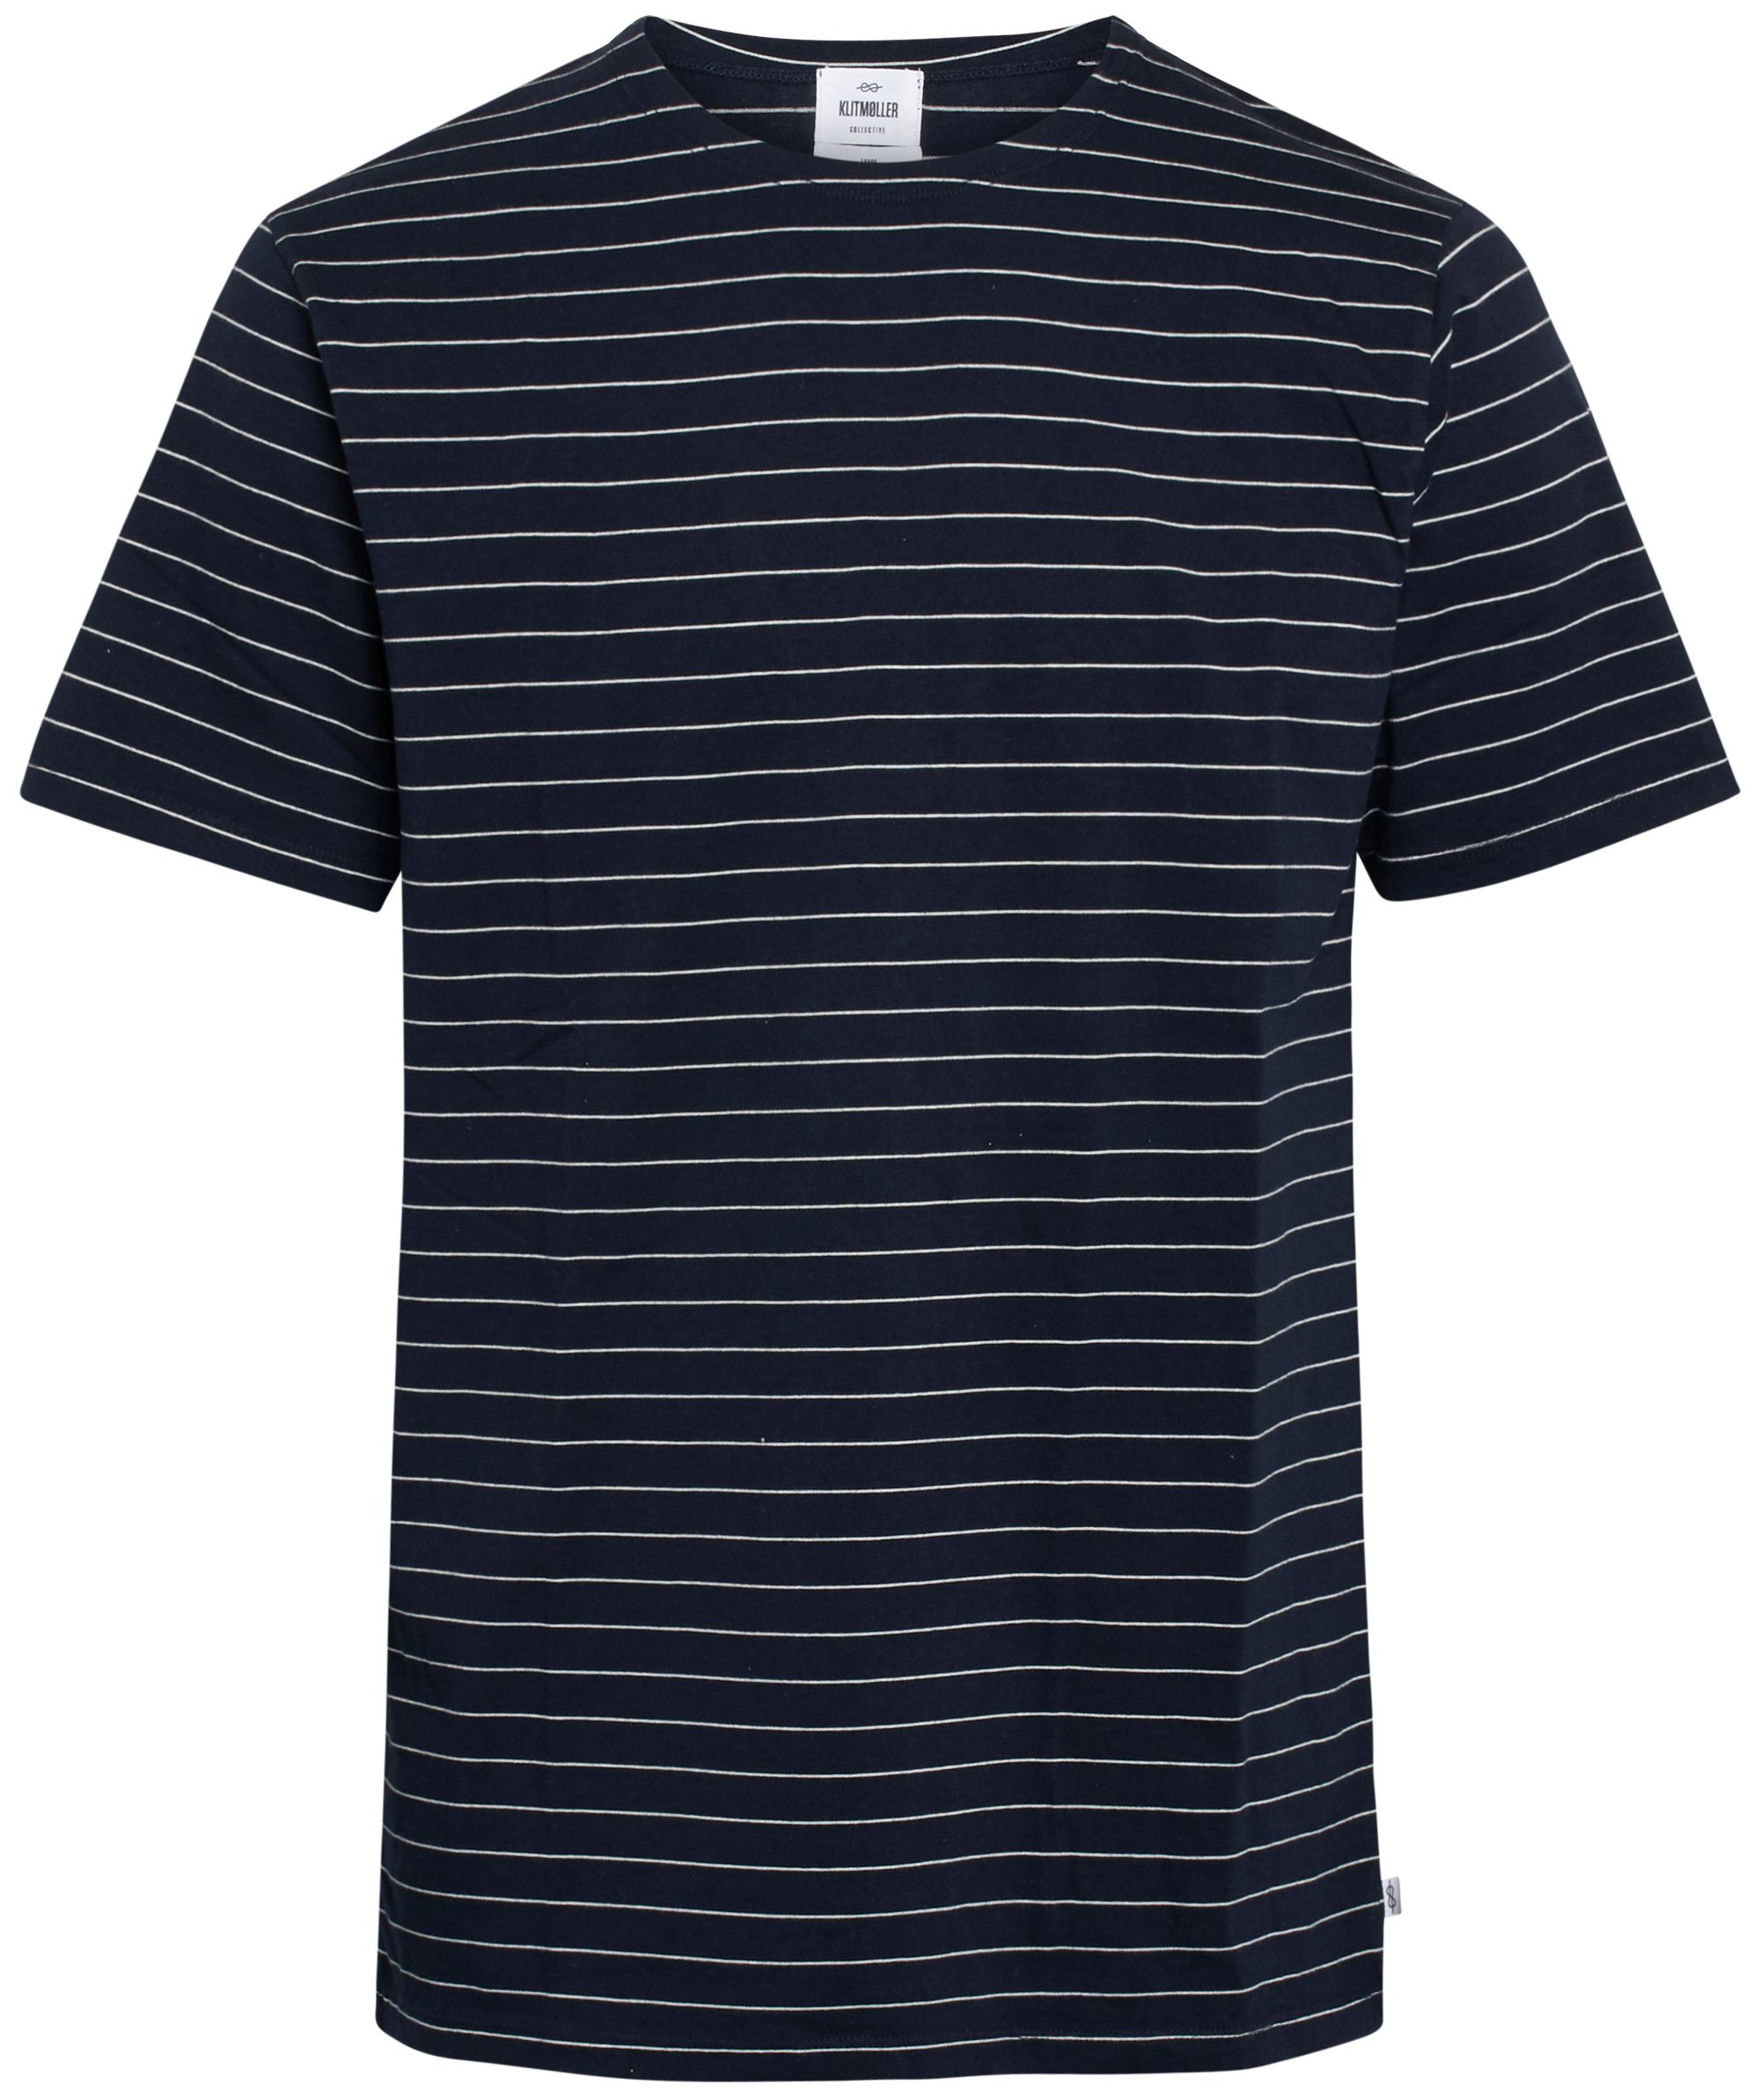 Gestreiftes T-Shirt Tom tee Navy/cream